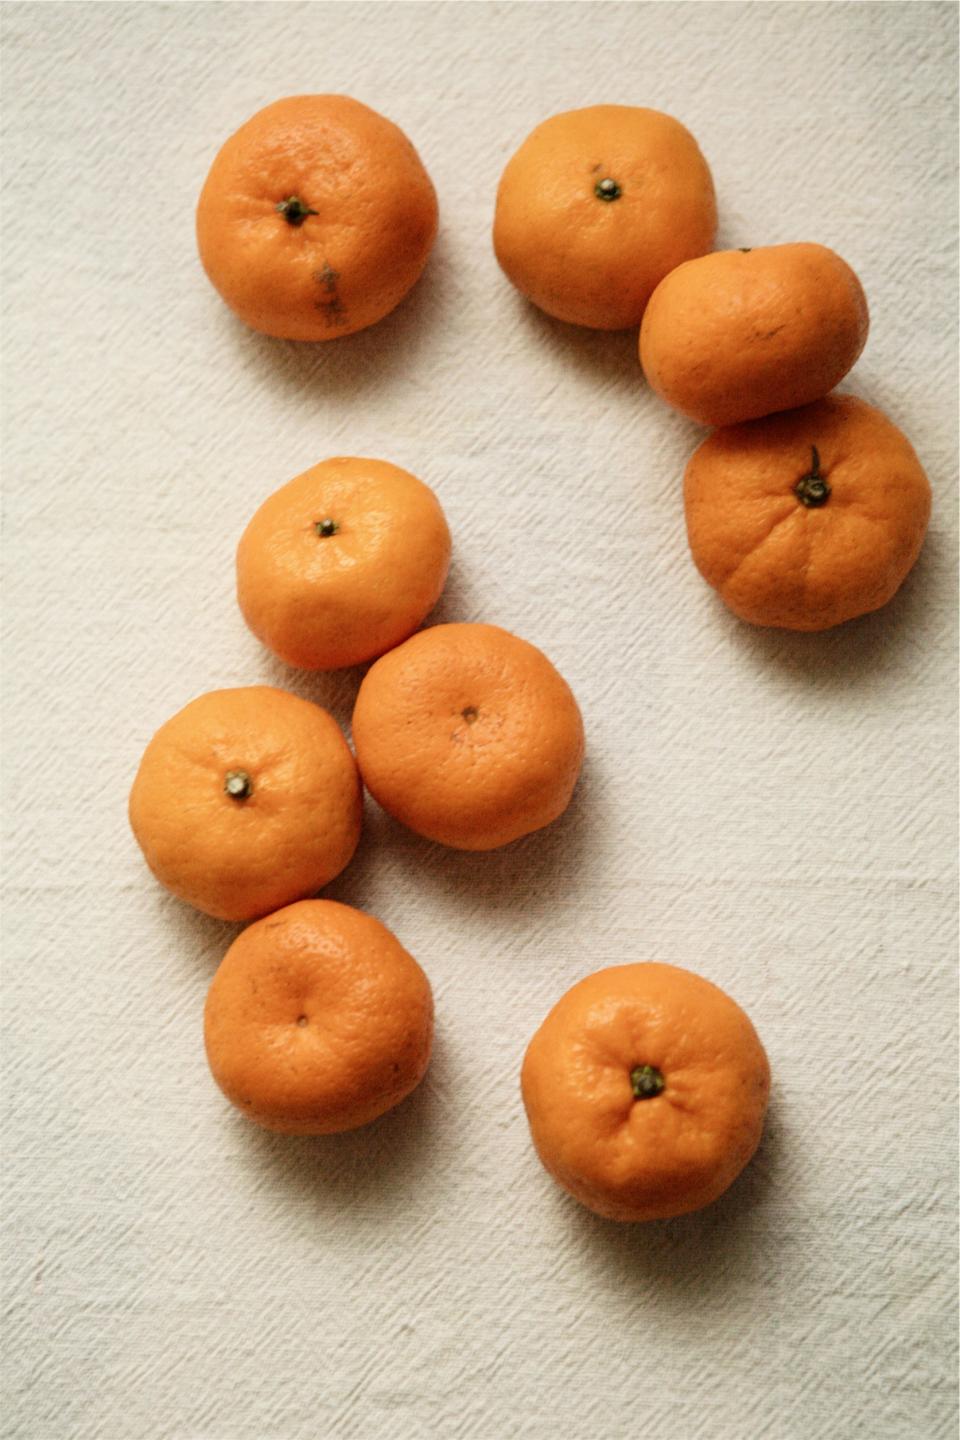 tangergines orange Healthy fruits food clementines 